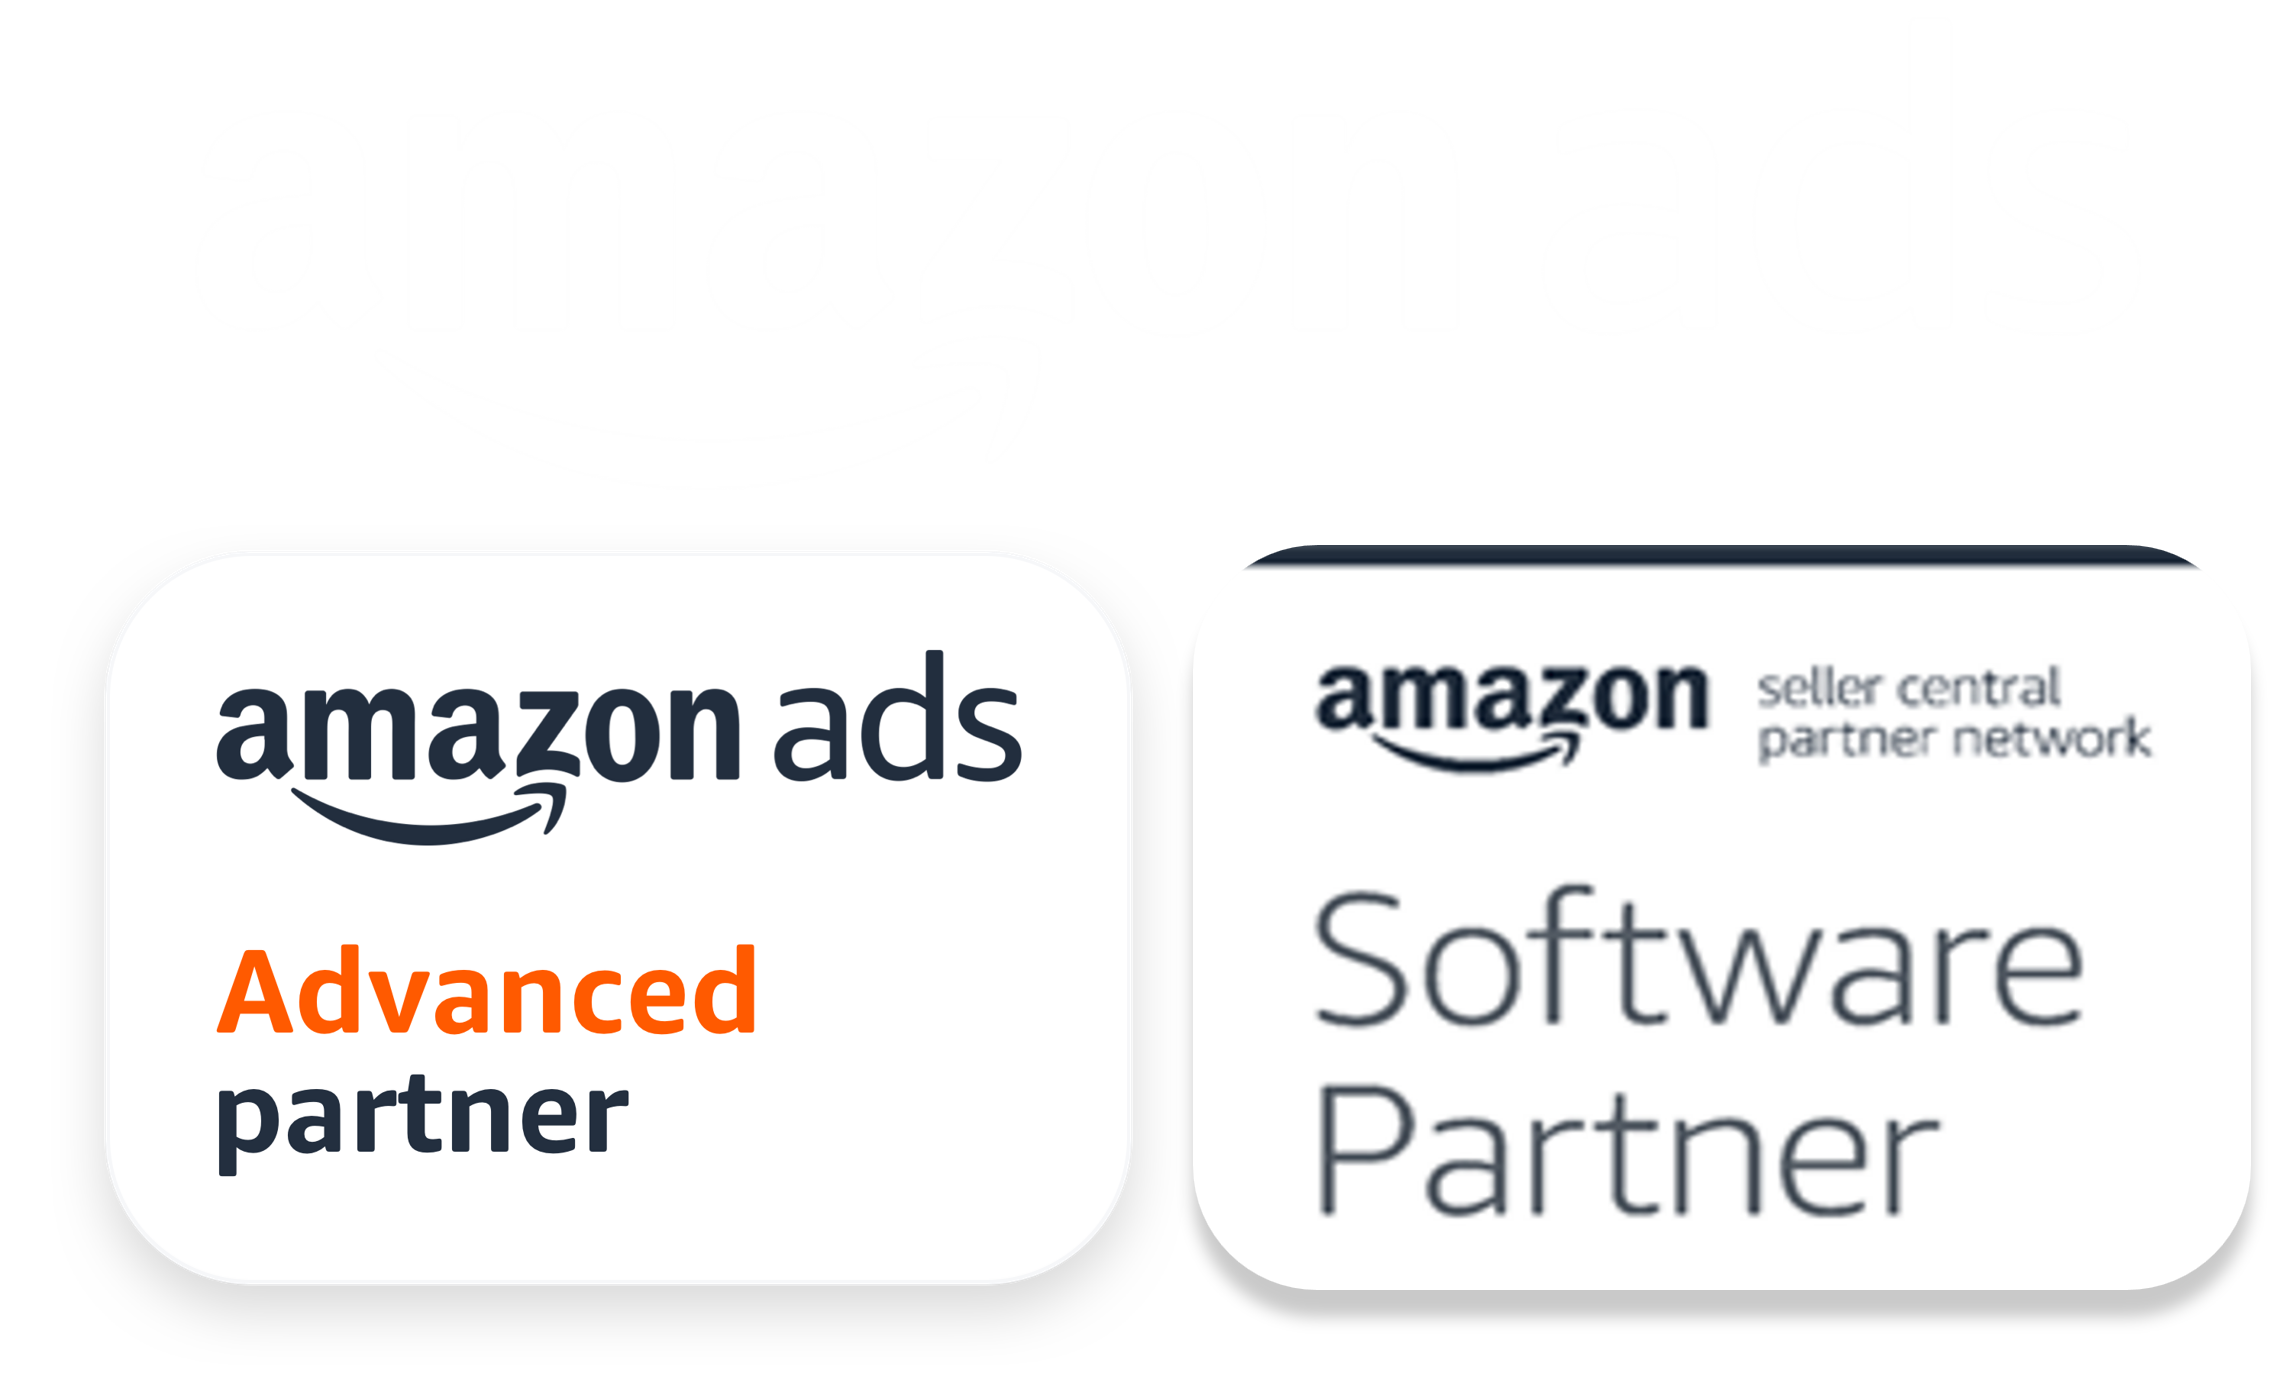 MixShift is an Amazon Advanced Partner